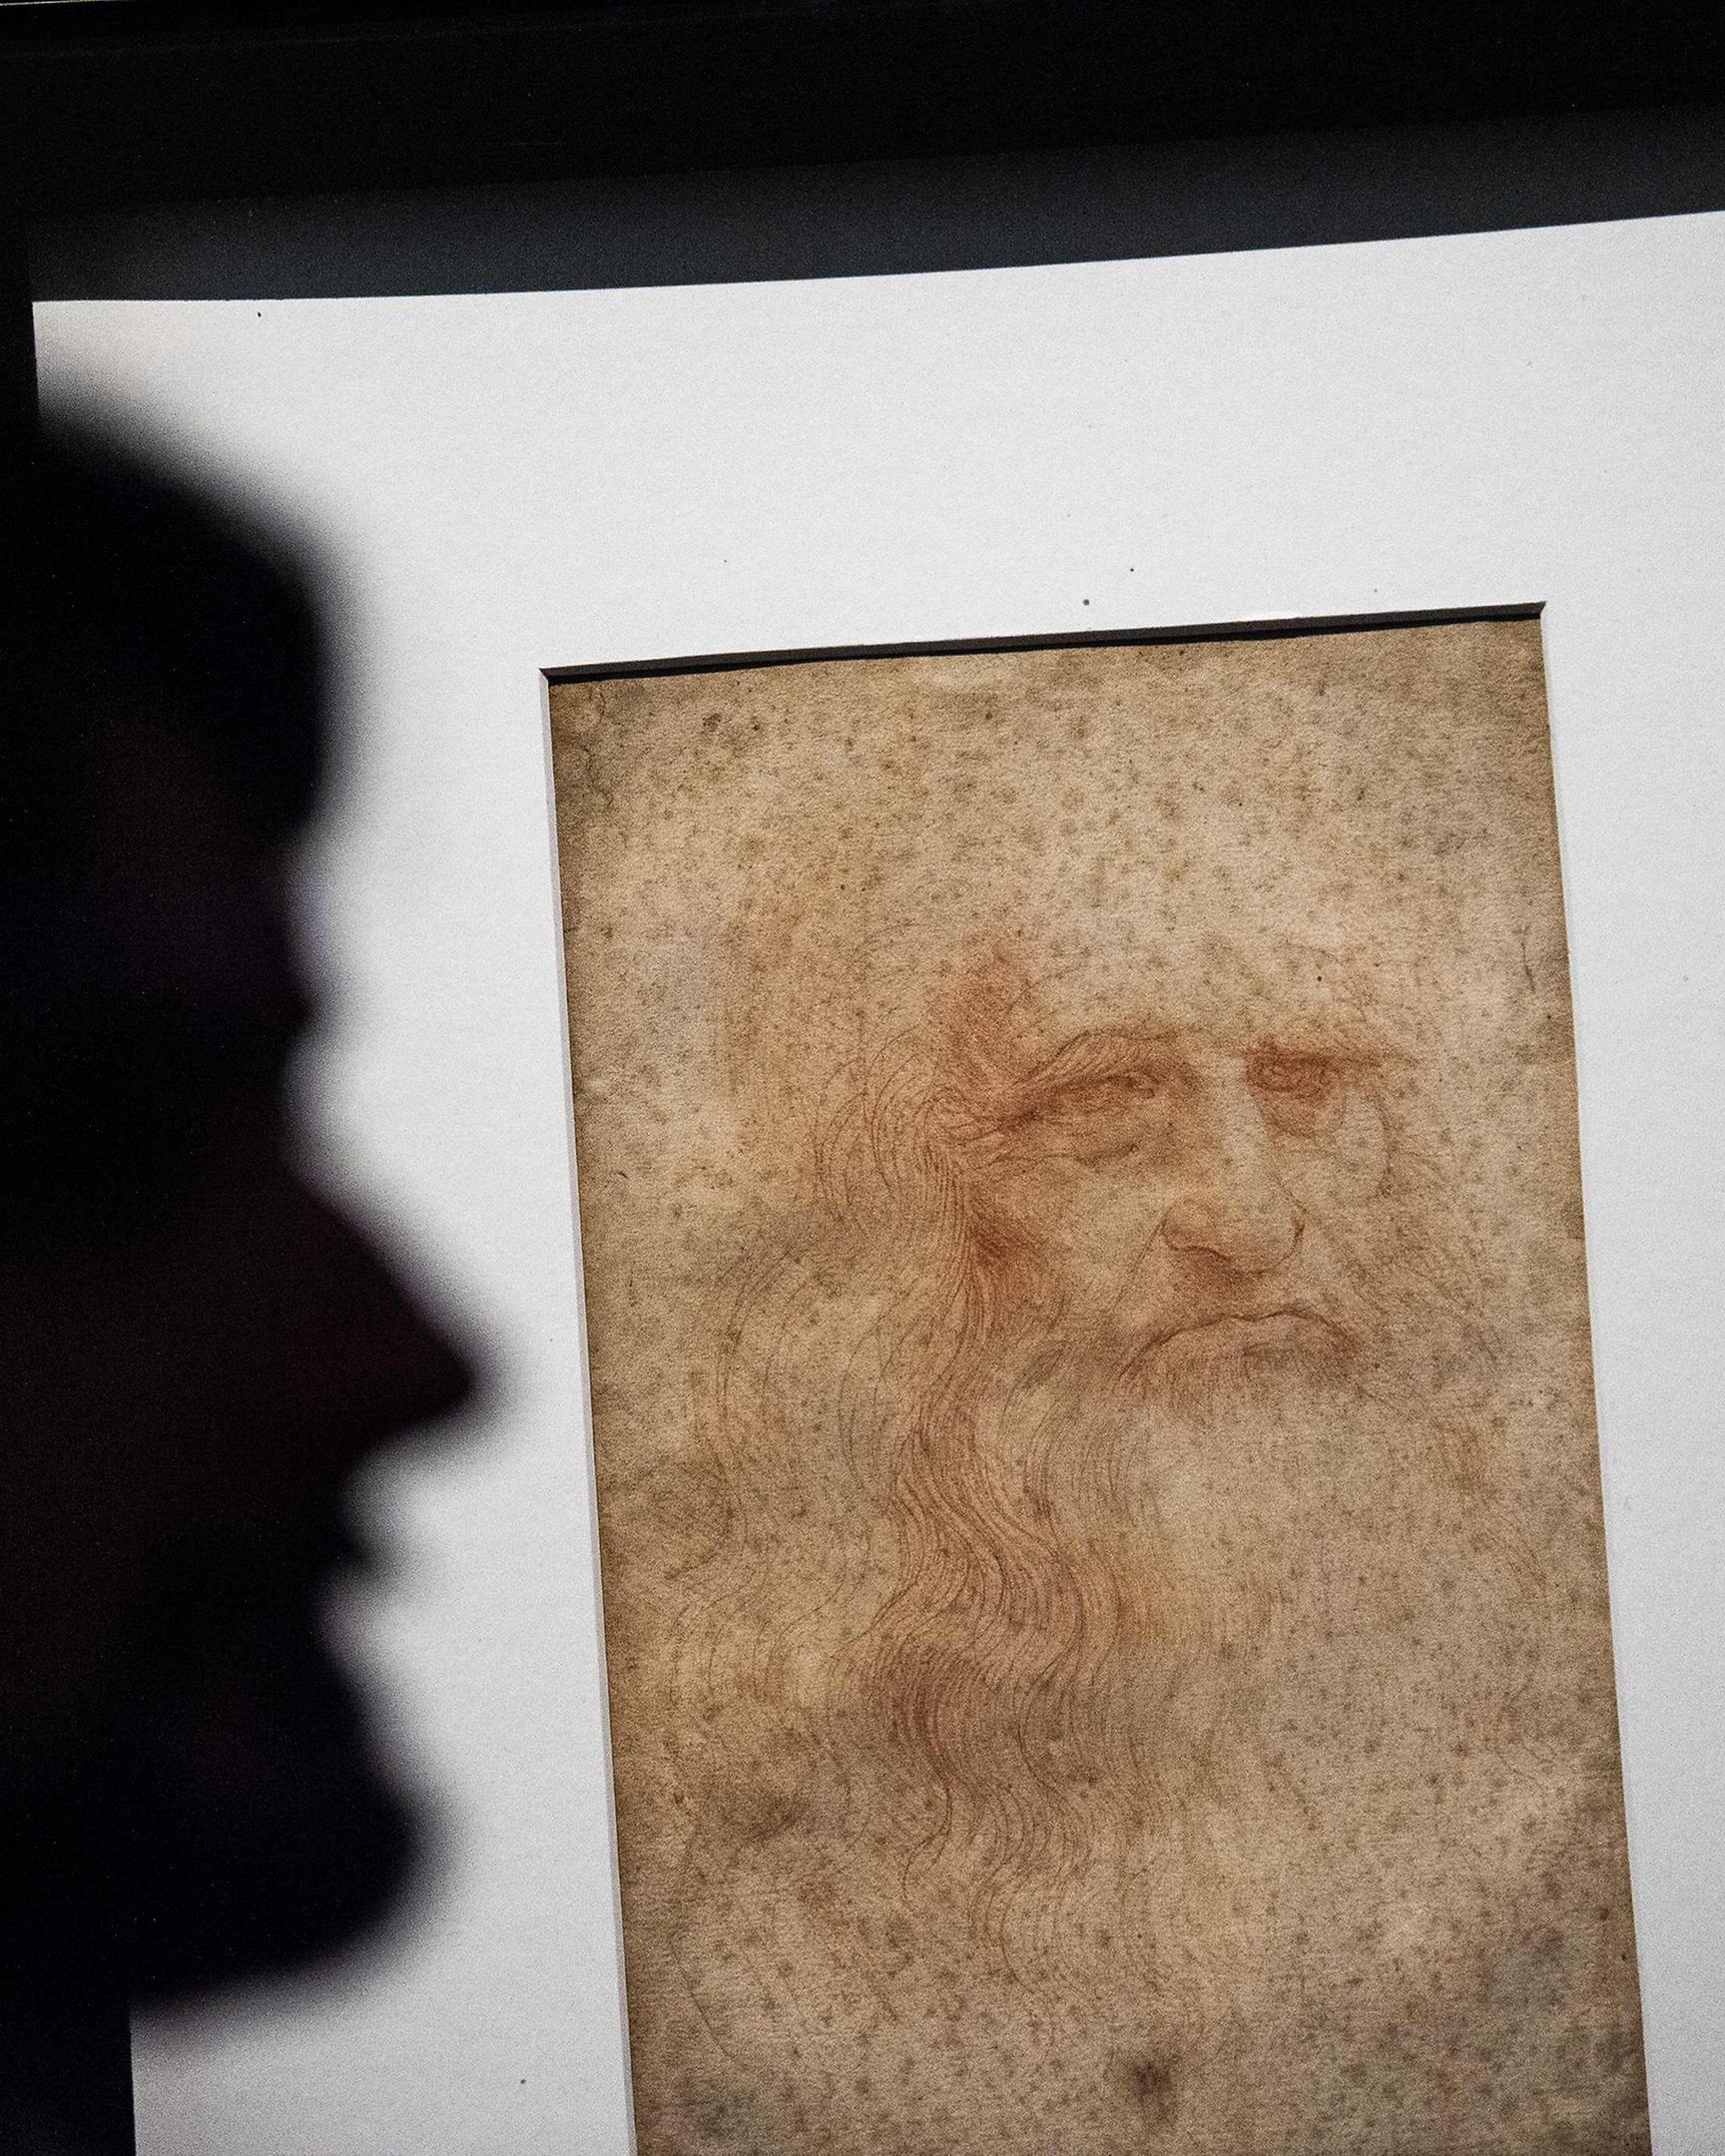 Leonardo da Vinci im Selbstporträt.